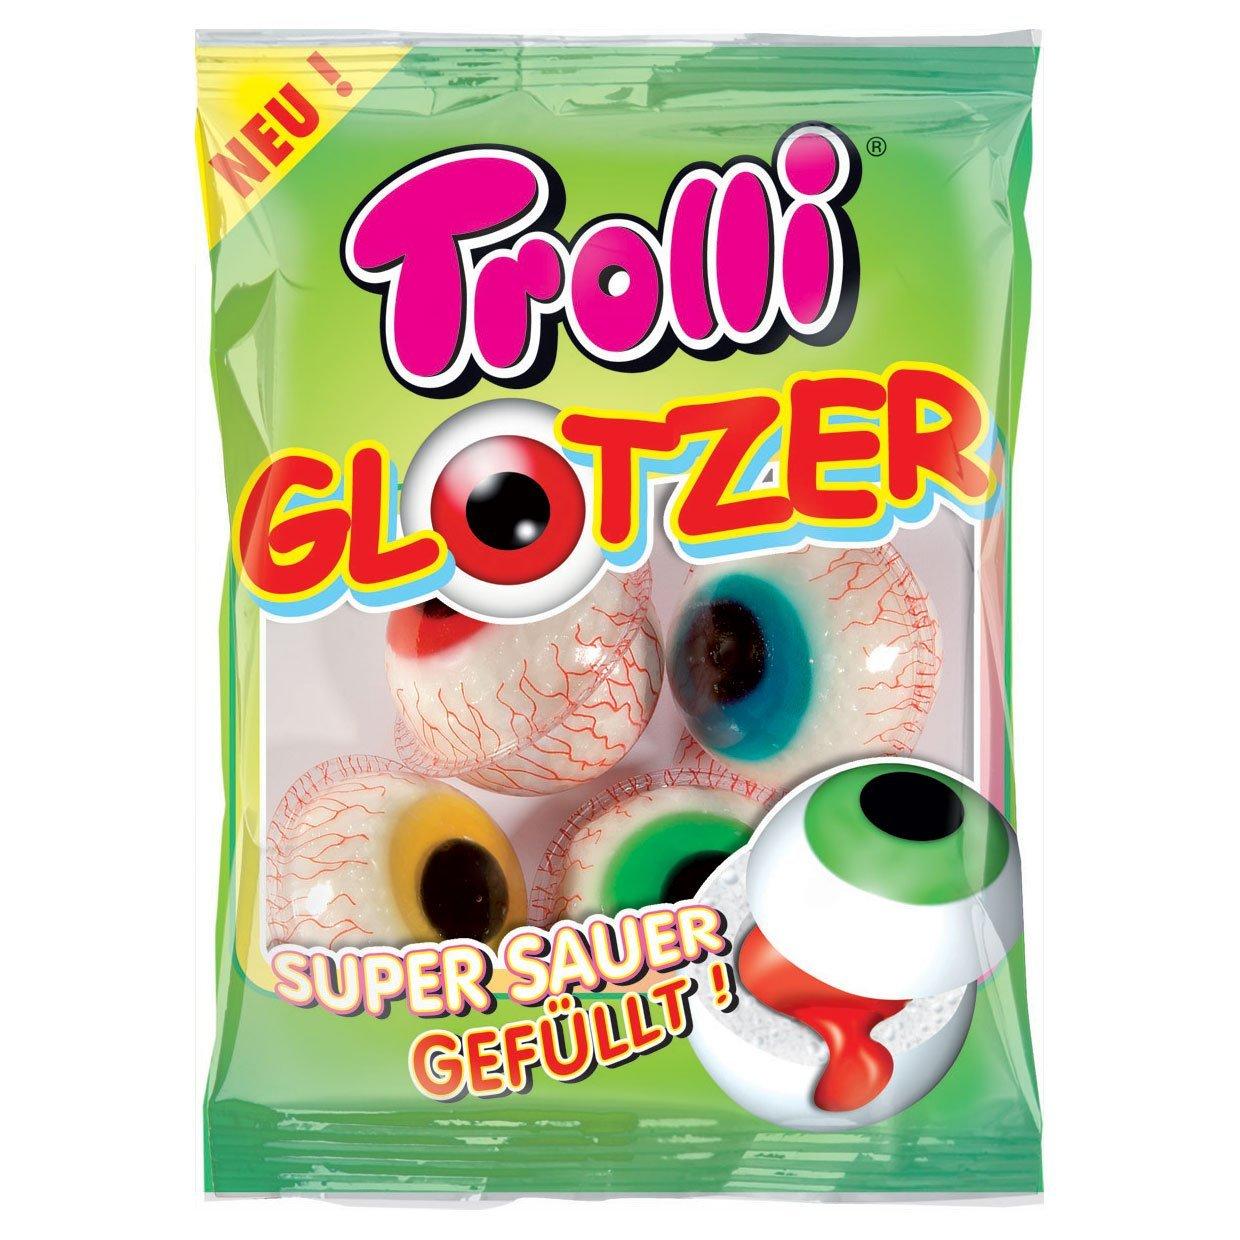 Trolli Glotzer - 75g